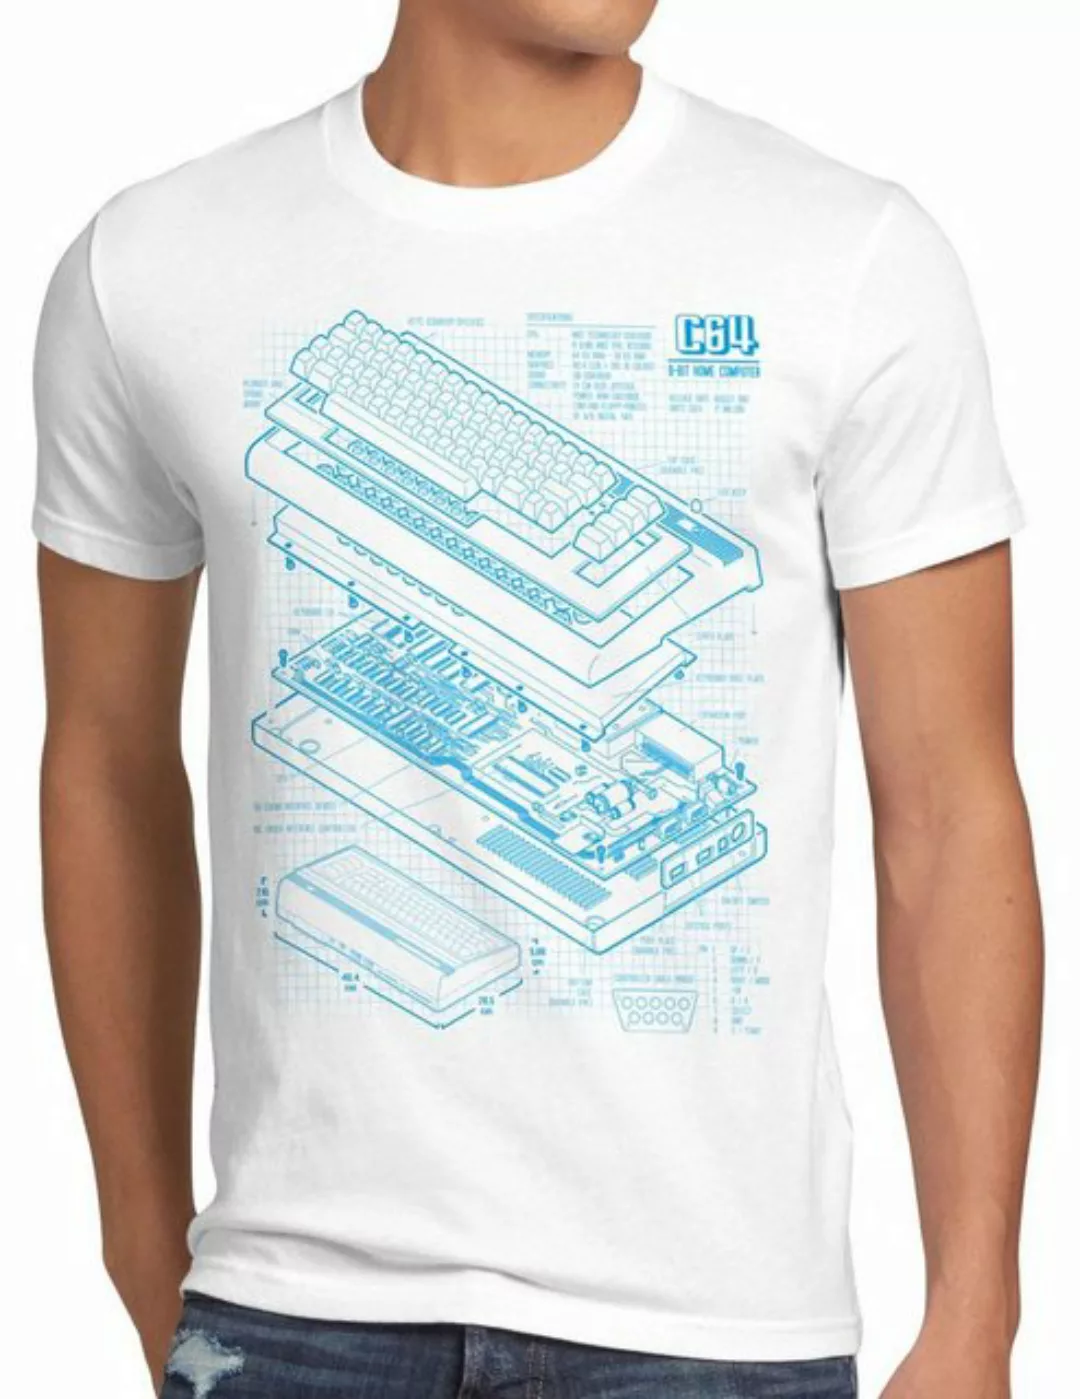 style3 Print-Shirt Herren T-Shirt C64 Heimcomputer Blaupause classic gamer günstig online kaufen